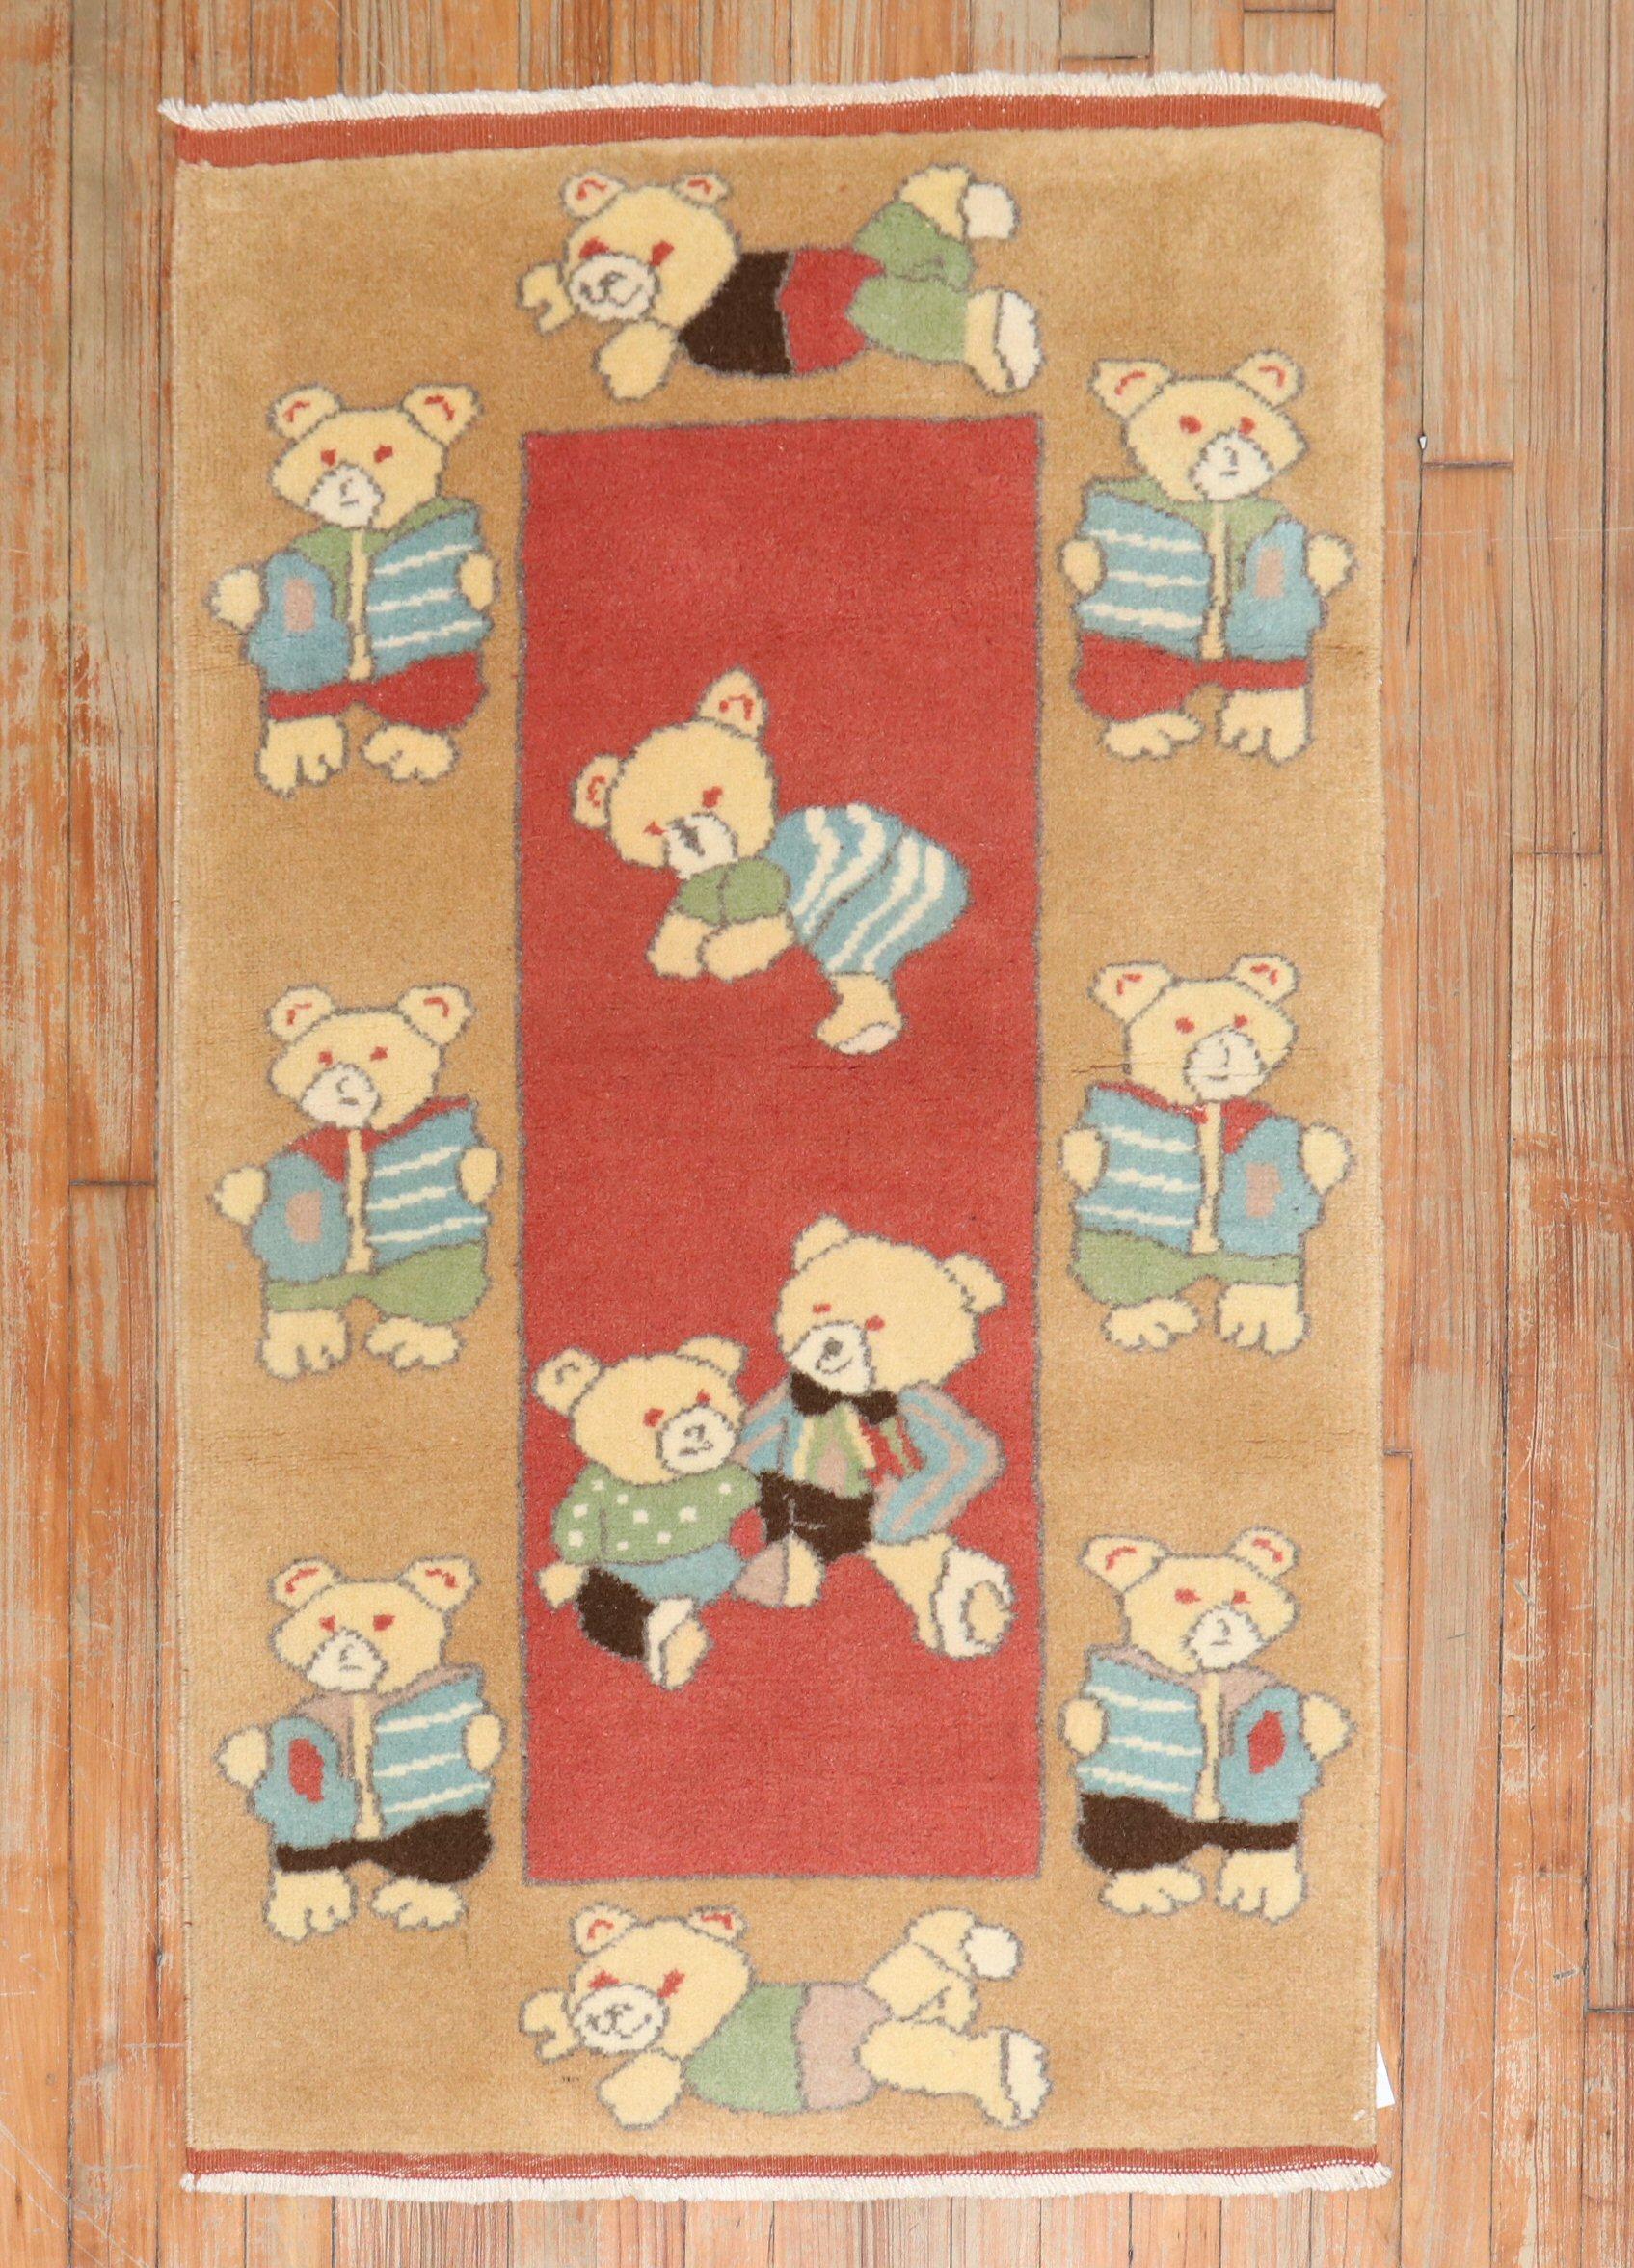 Late 20th century one of a kind Konya rug depicting teddy bears.

Measures: 2'6'' x 4'5''.